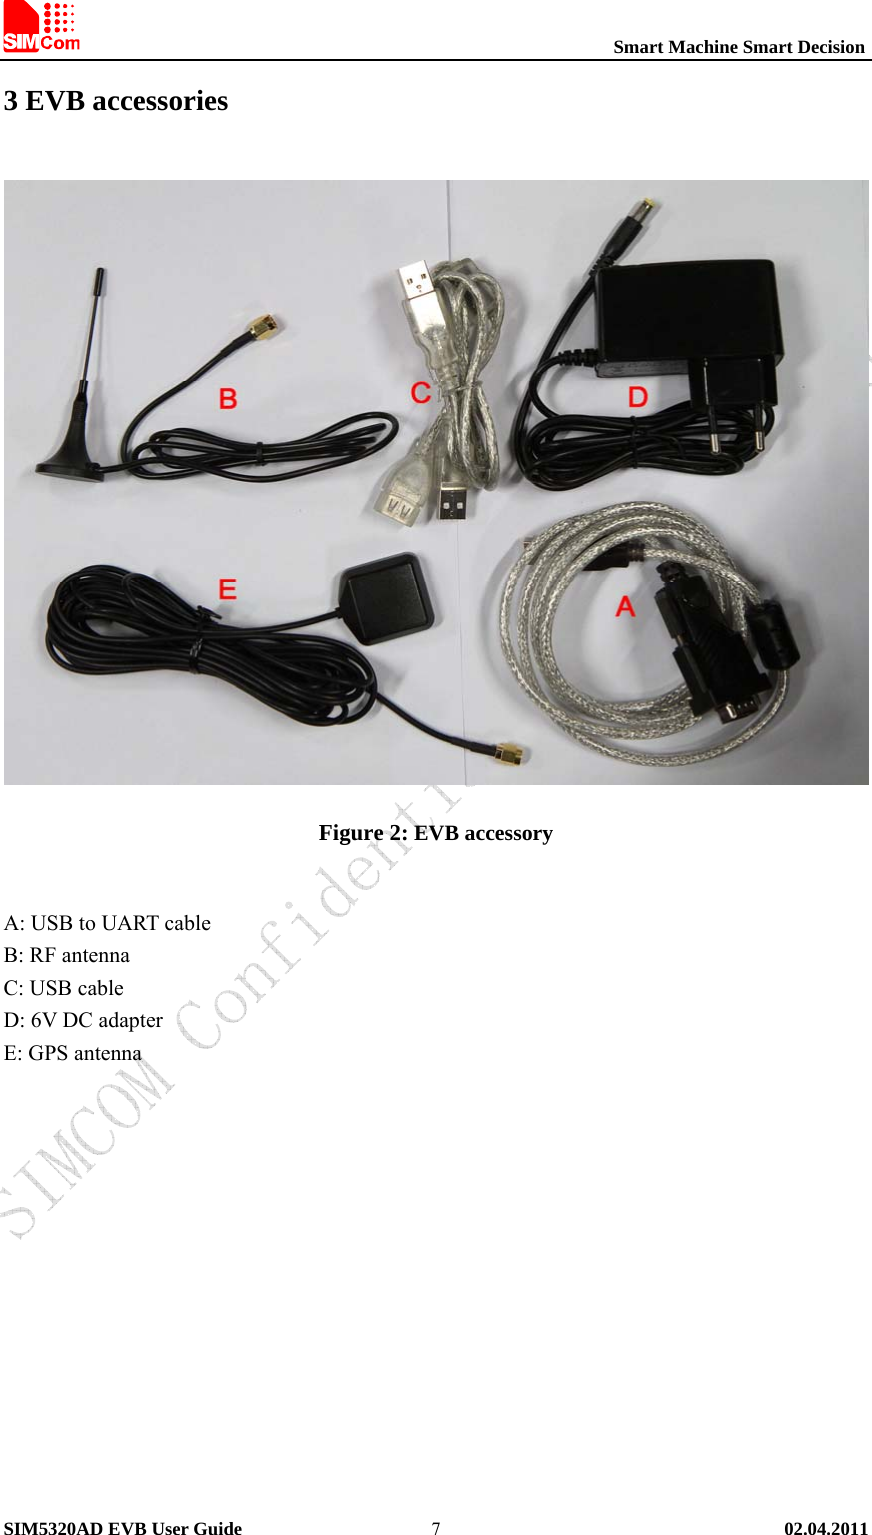                                                          Smart Machine Smart Decision SIM5320AD EVB User Guide   02.04.2011   73 EVB accessories  Figure 2: EVB accessory  A: USB to UART cable B: RF antenna C: USB cable D: 6V DC adapter E: GPS antenna        